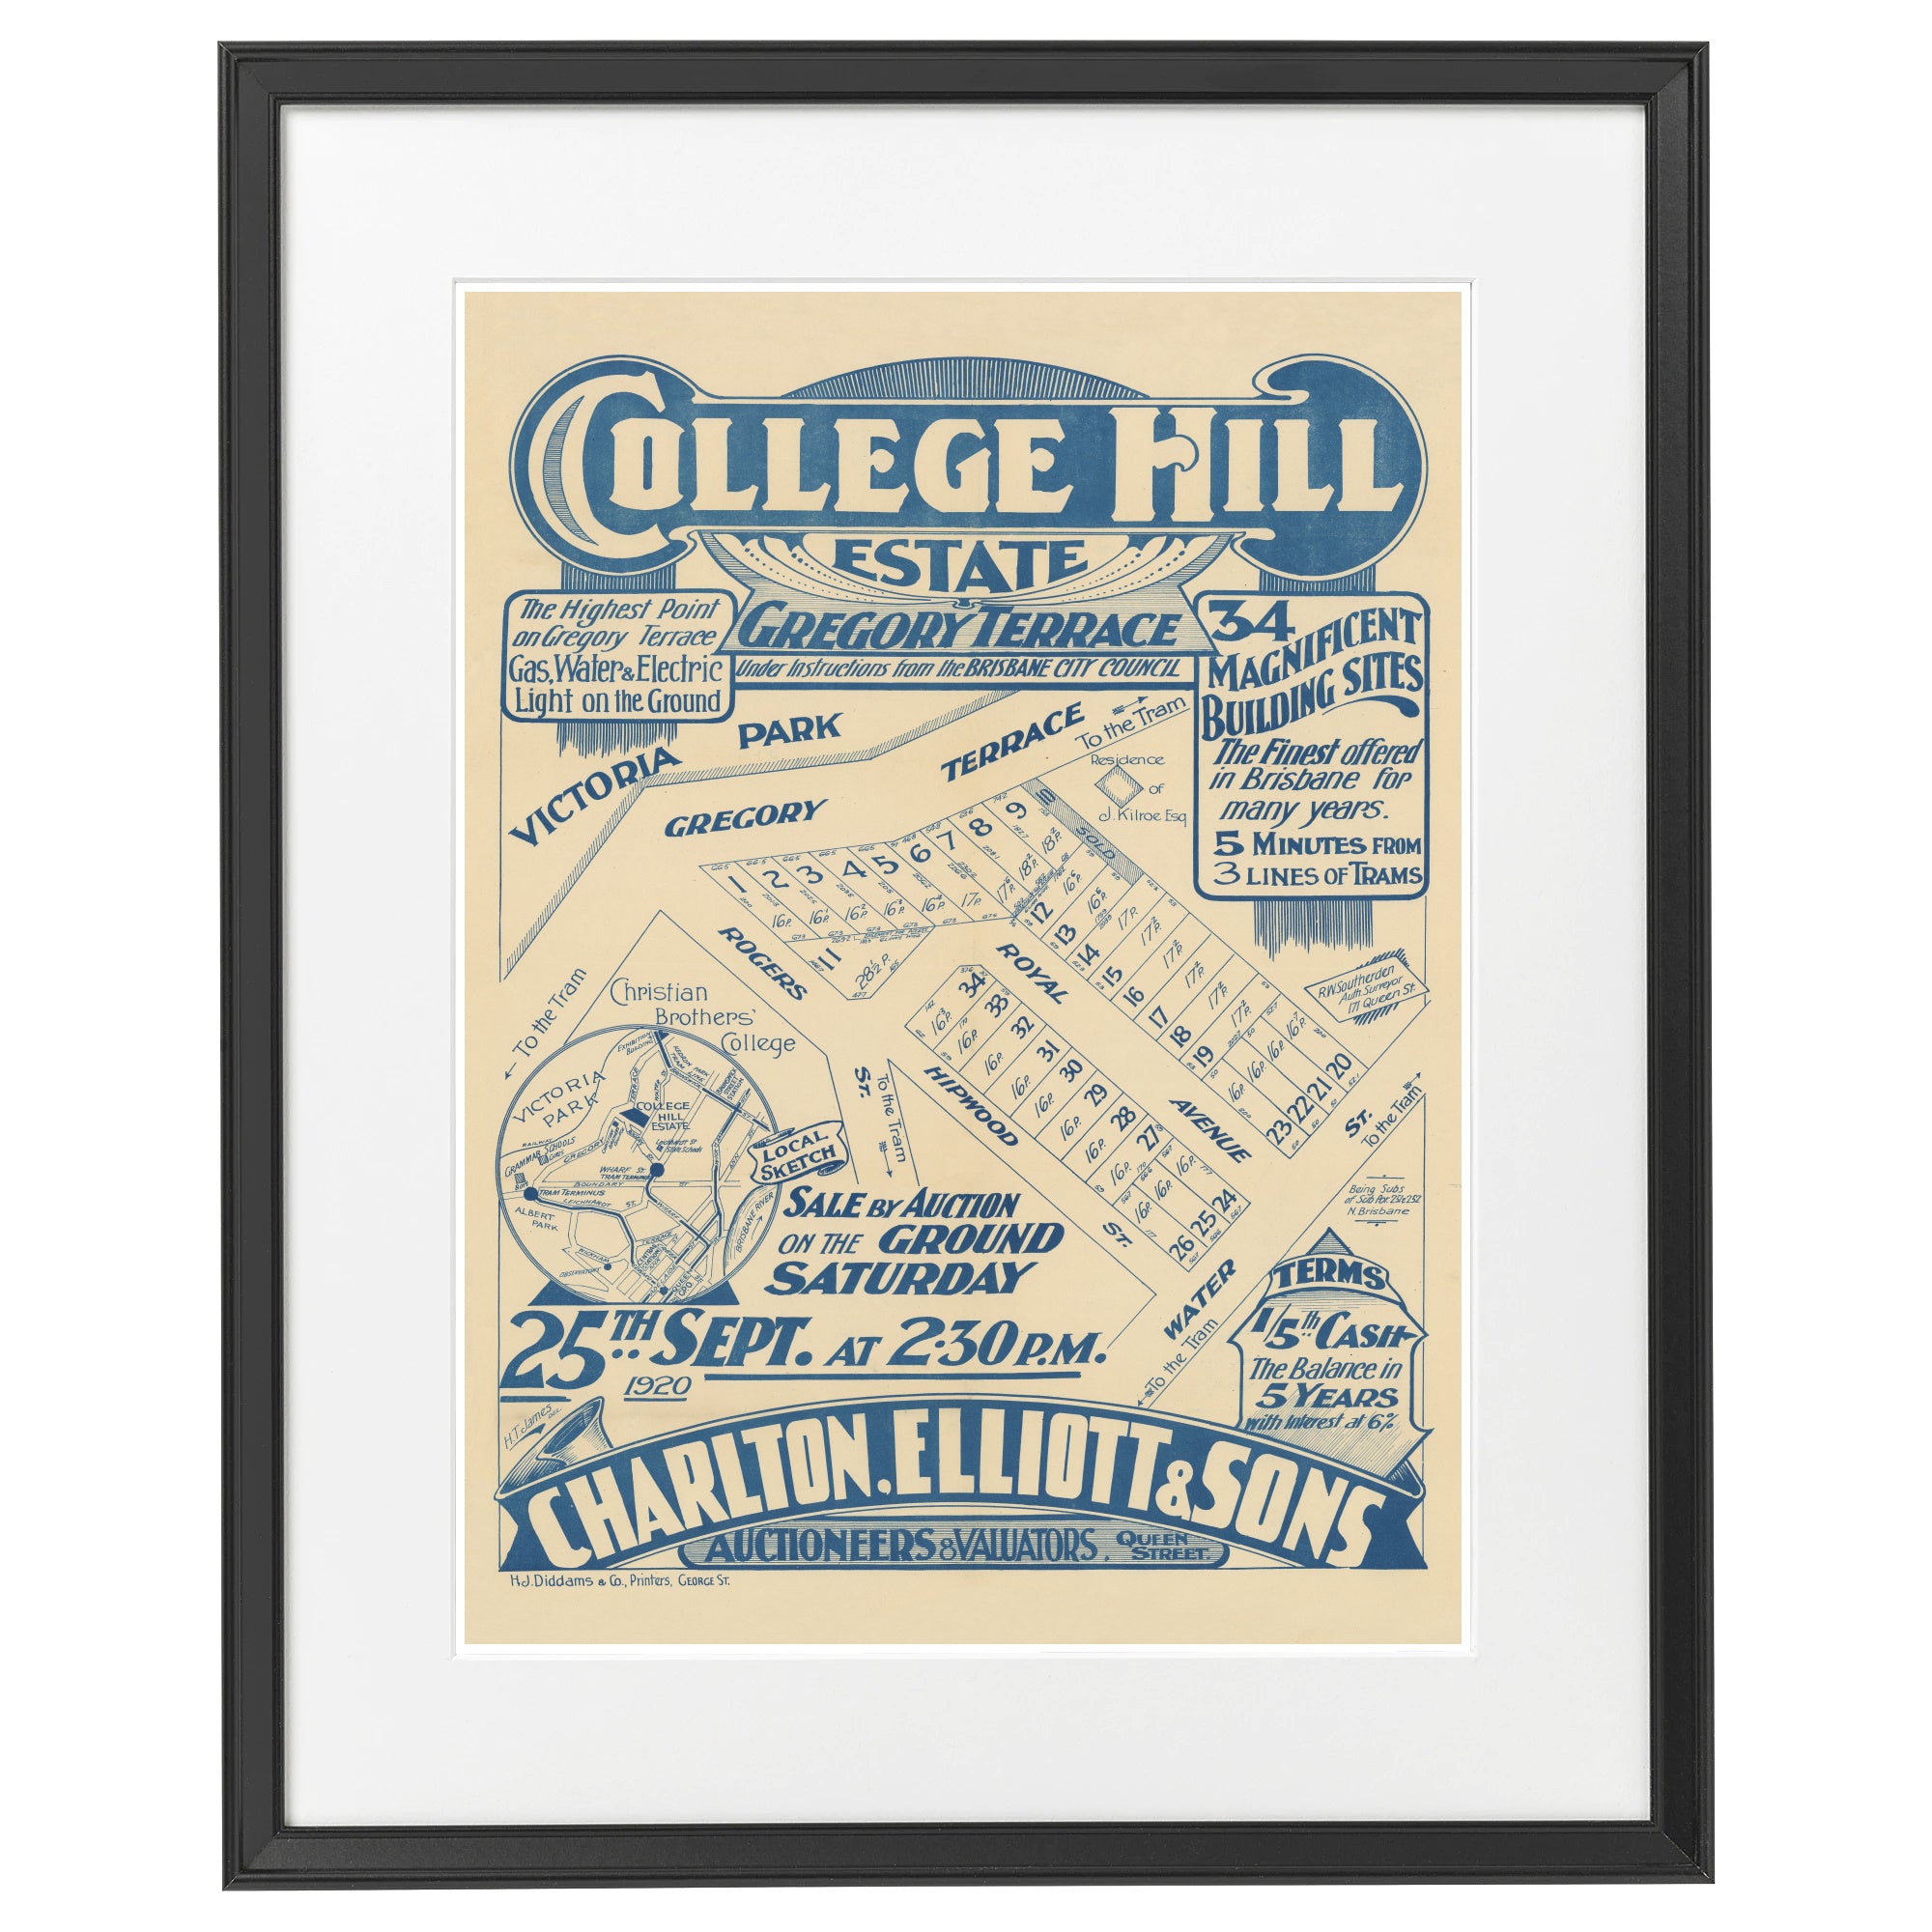 1920 Spring Hill - College Hill Estate